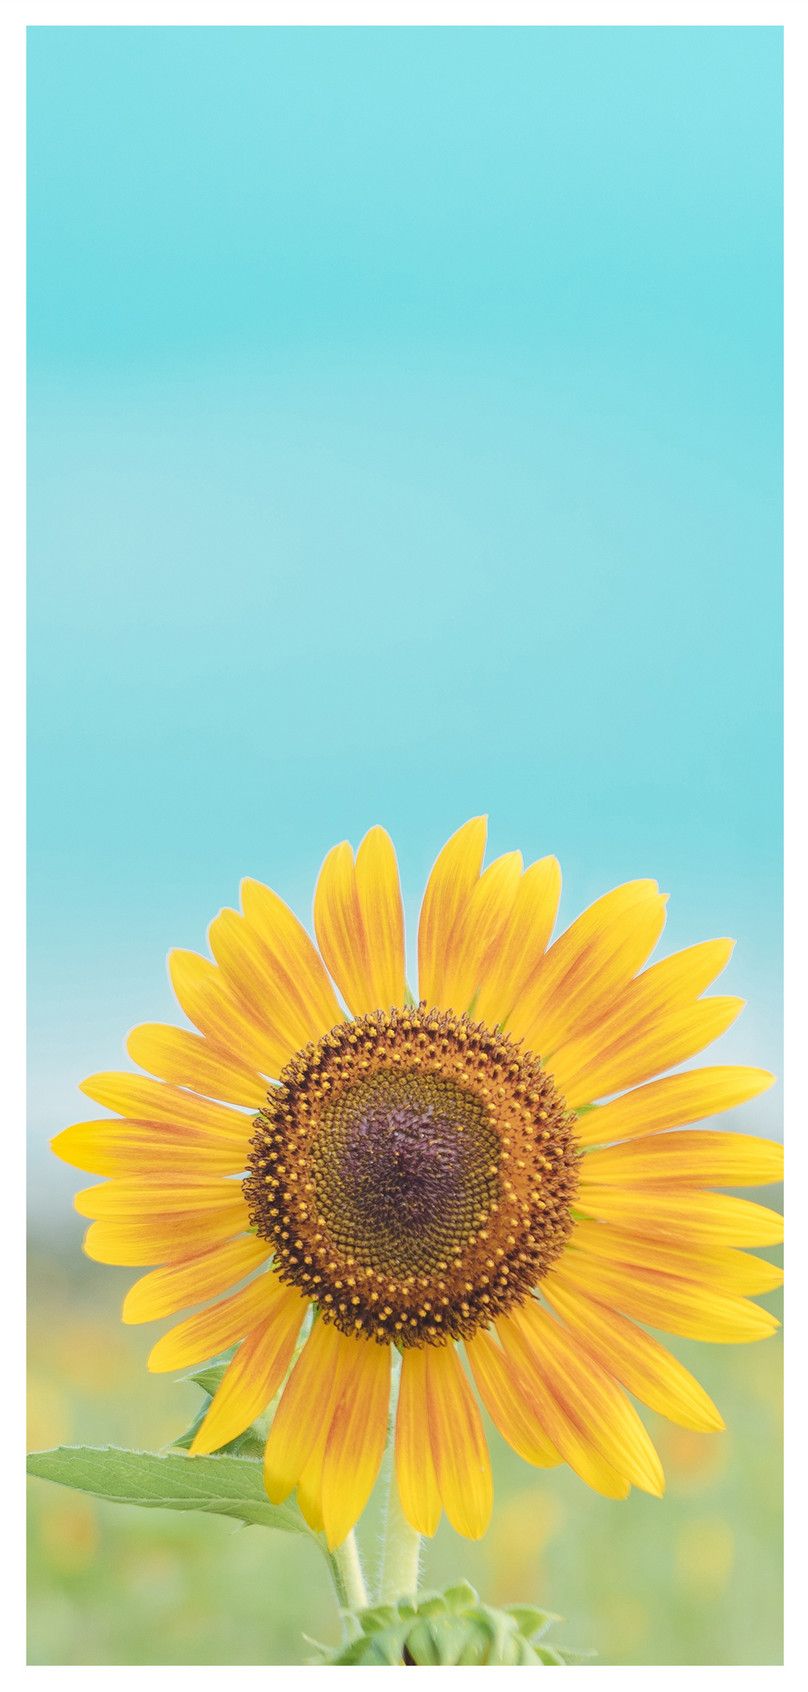 Sunflower Mobile Phone Wallpaper Background Image Free Download 400386085 Lovepik.com